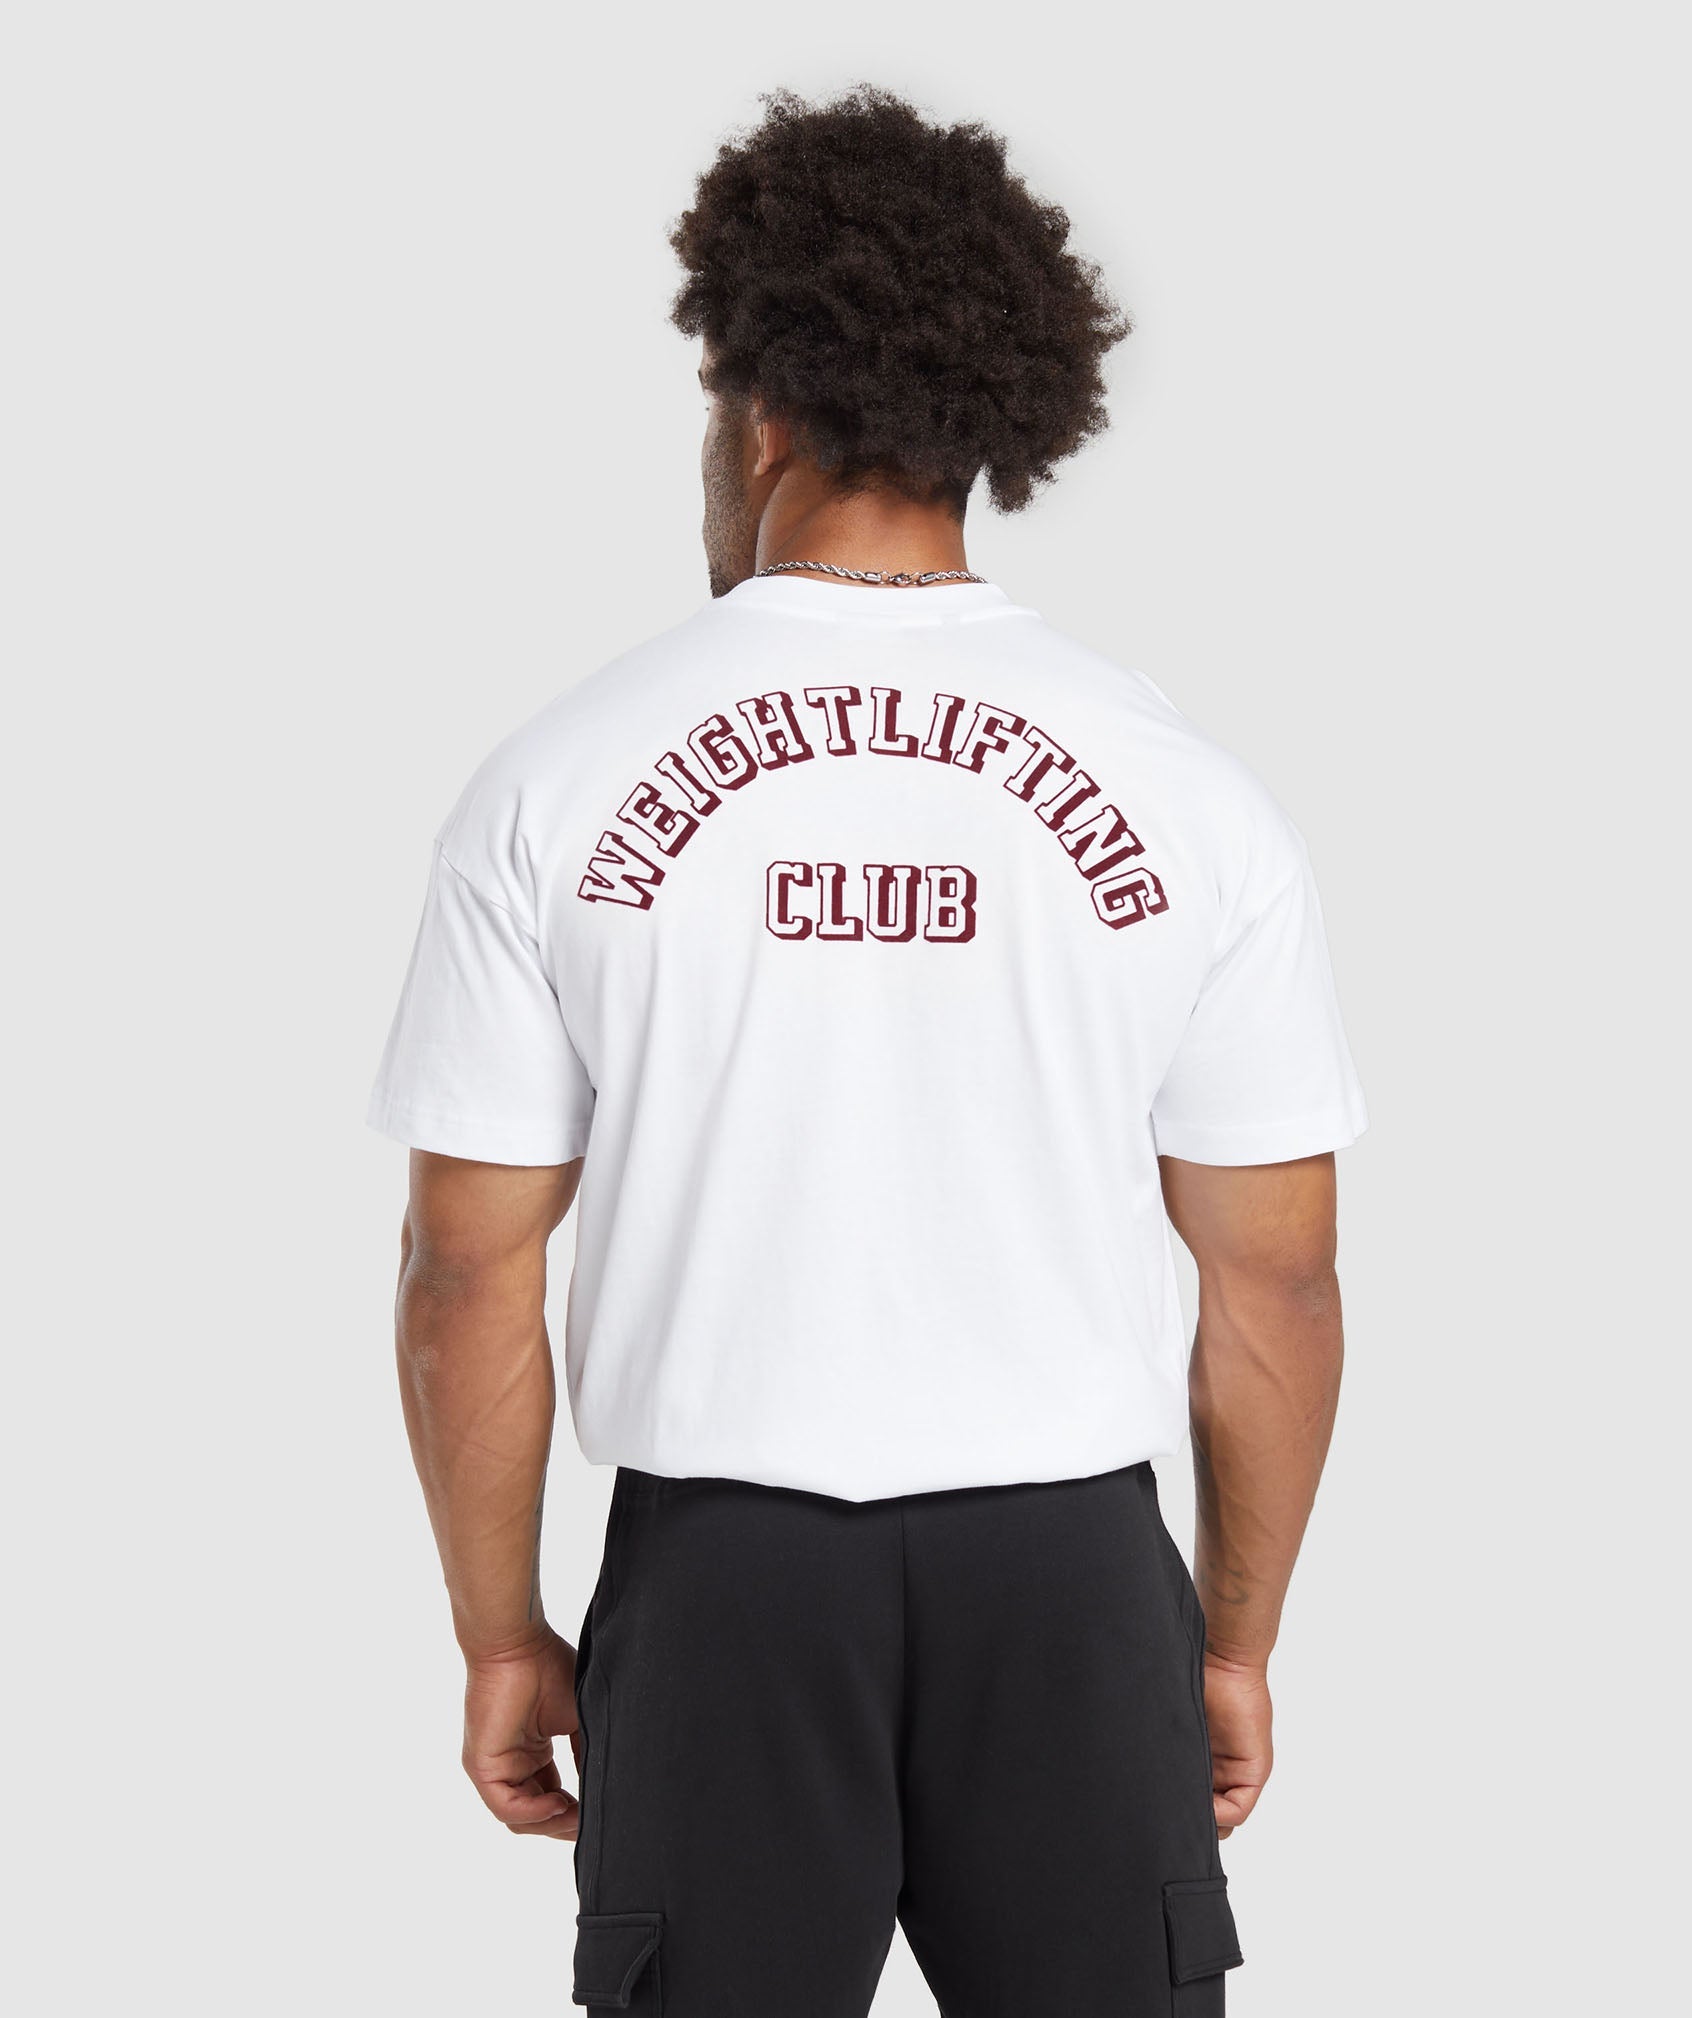 Weightlifting Club T-Shirt